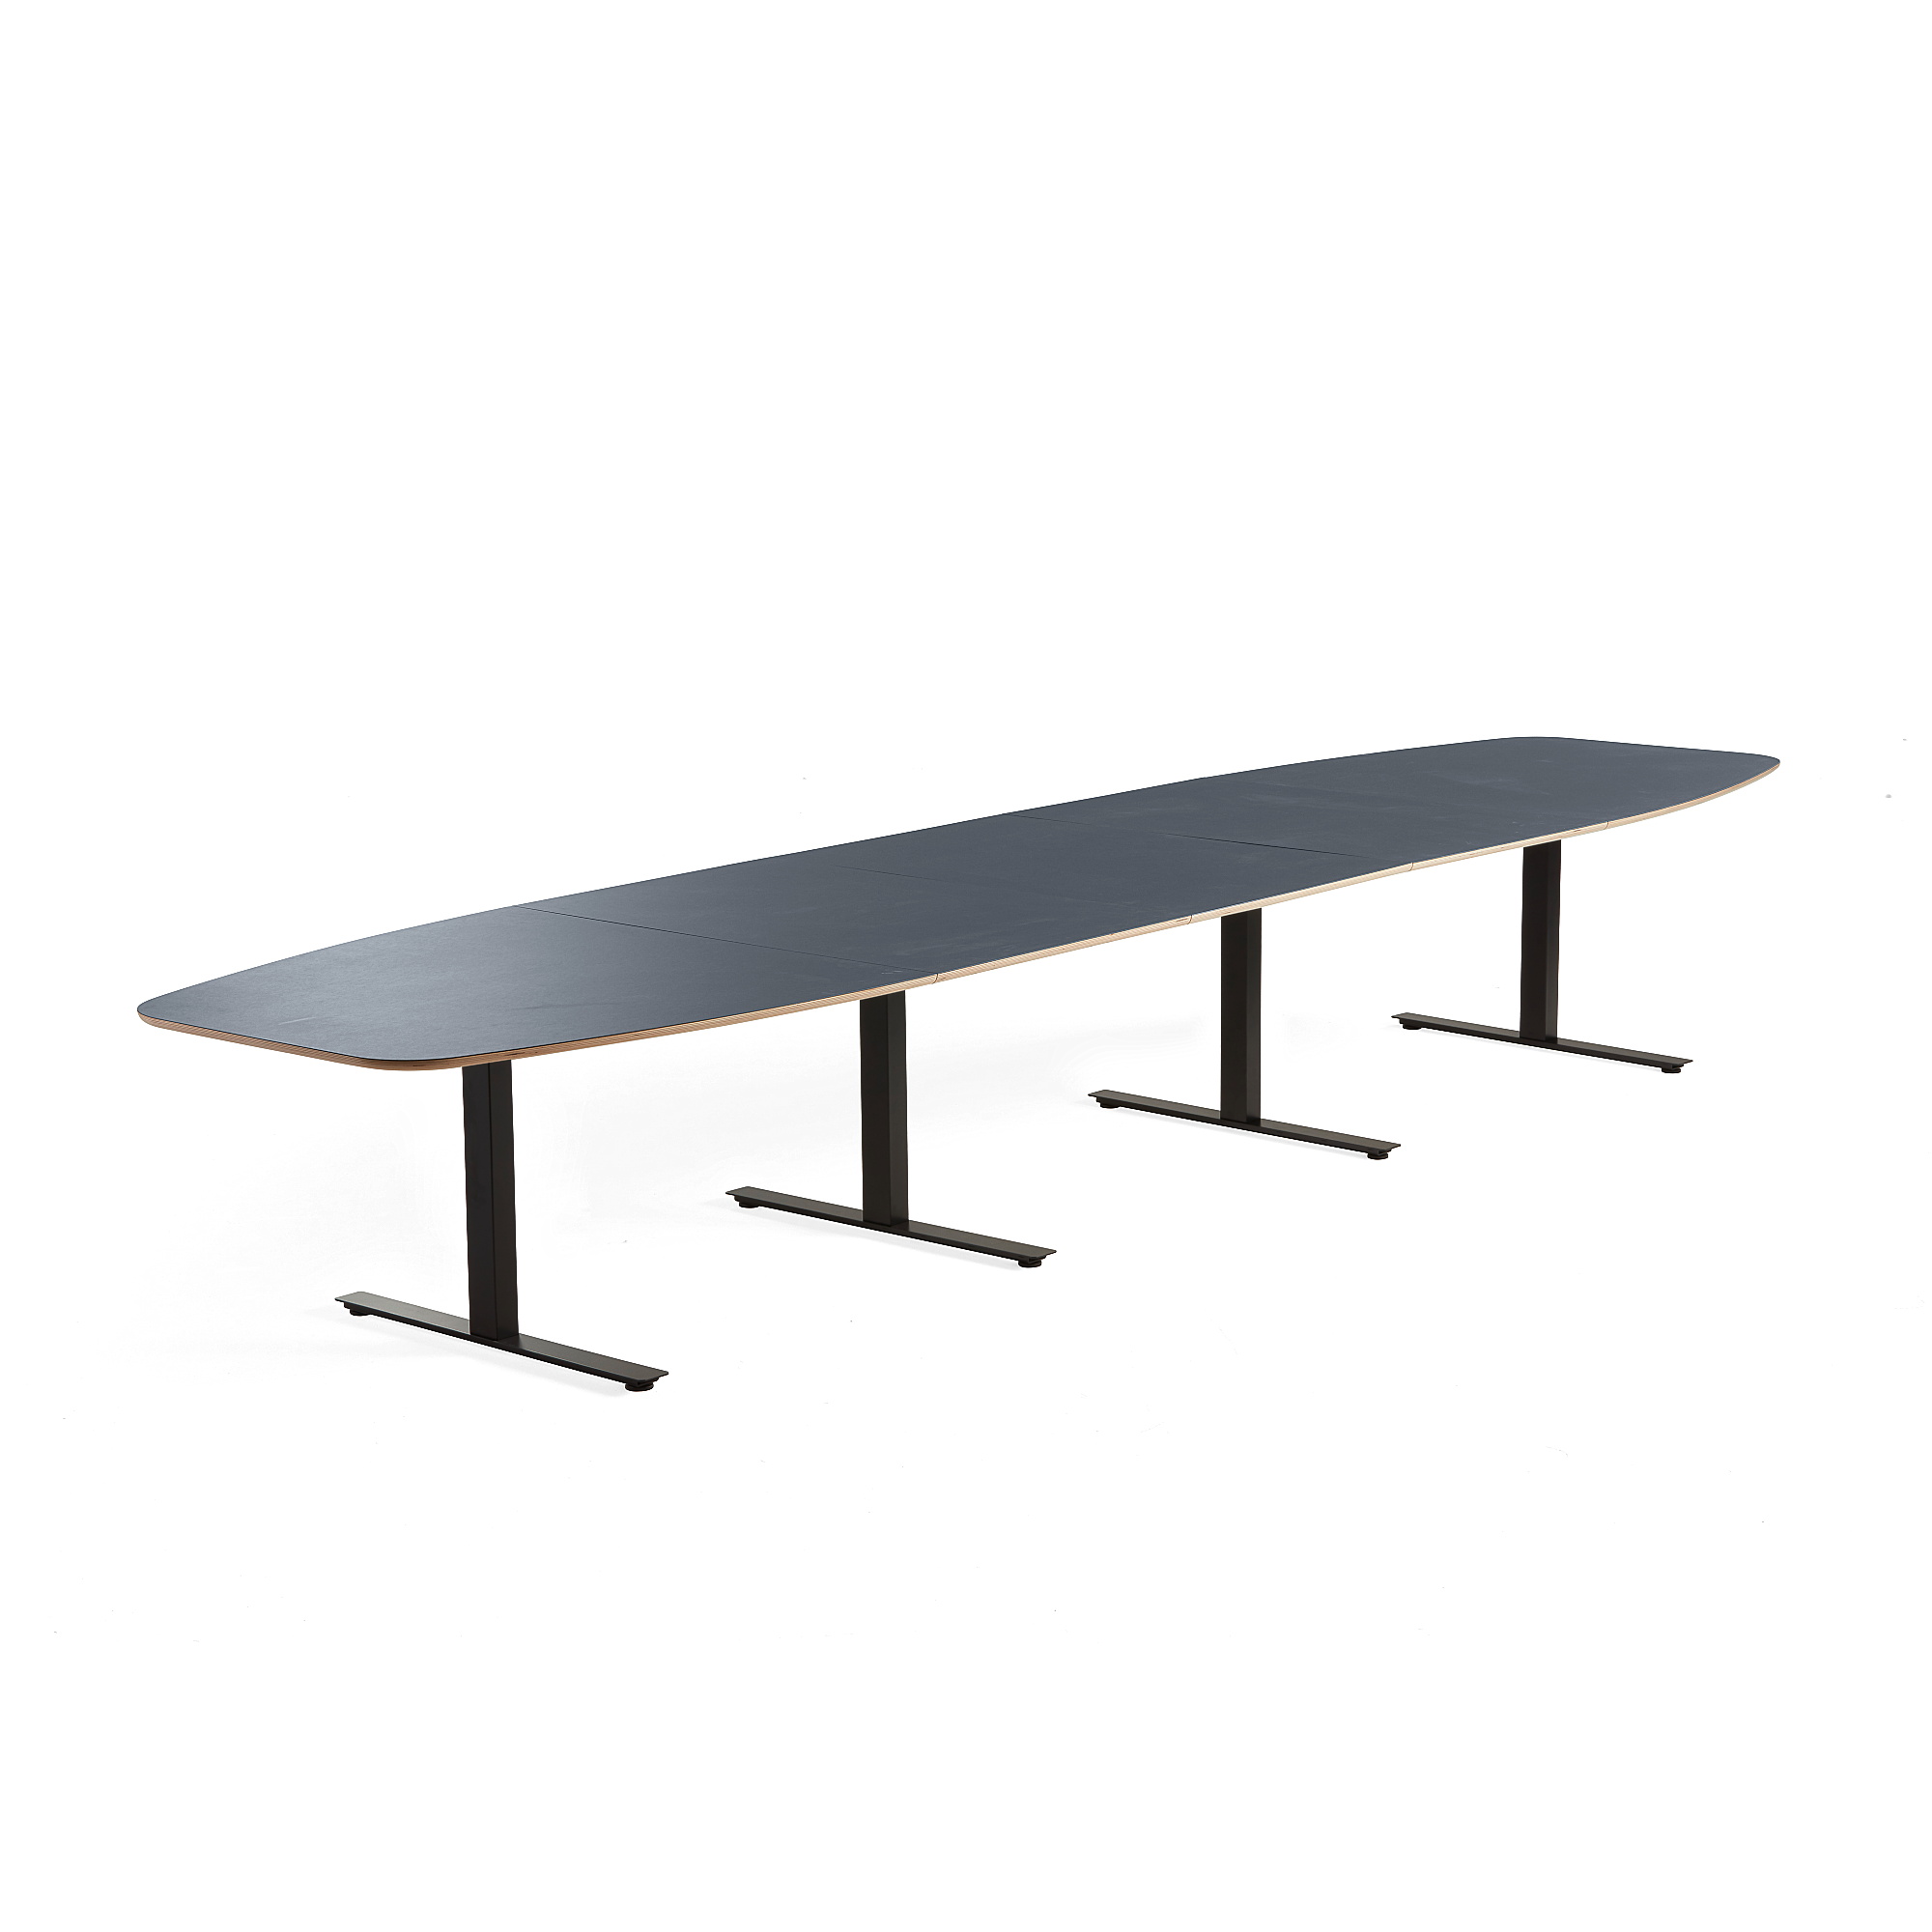 Rokovací stôl AUDREY, 4800x1200 mm, čierny rám, pastelová modrá doska